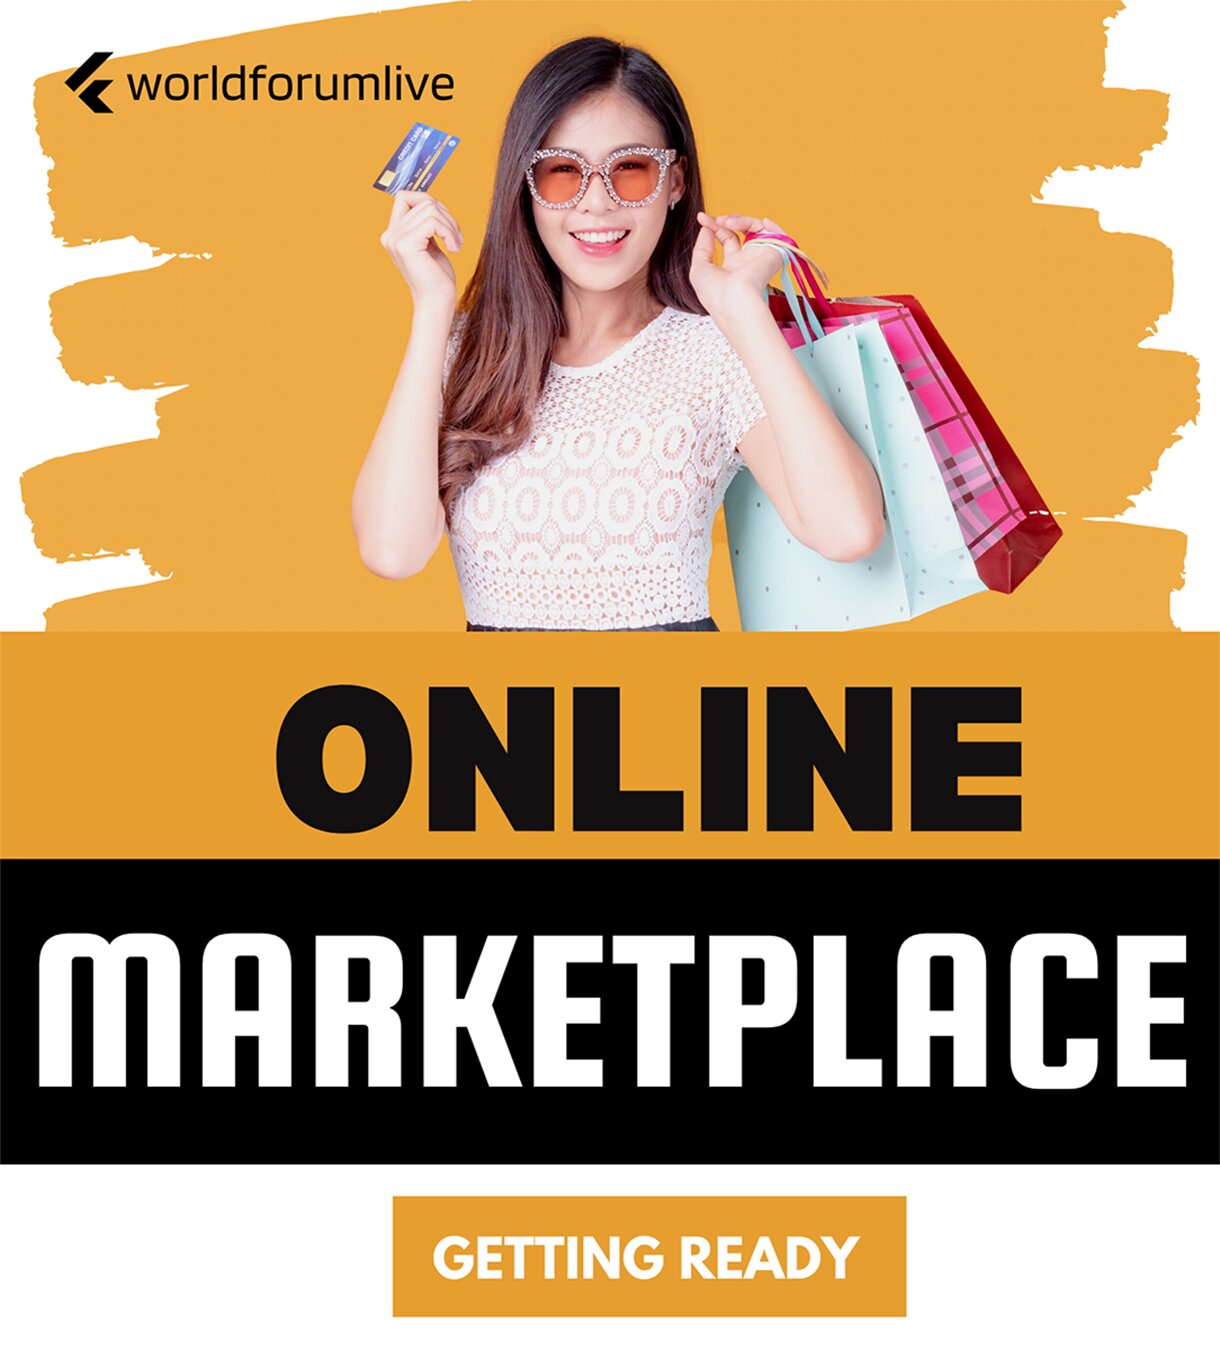 Online-marketplace-getting-ready.jpg